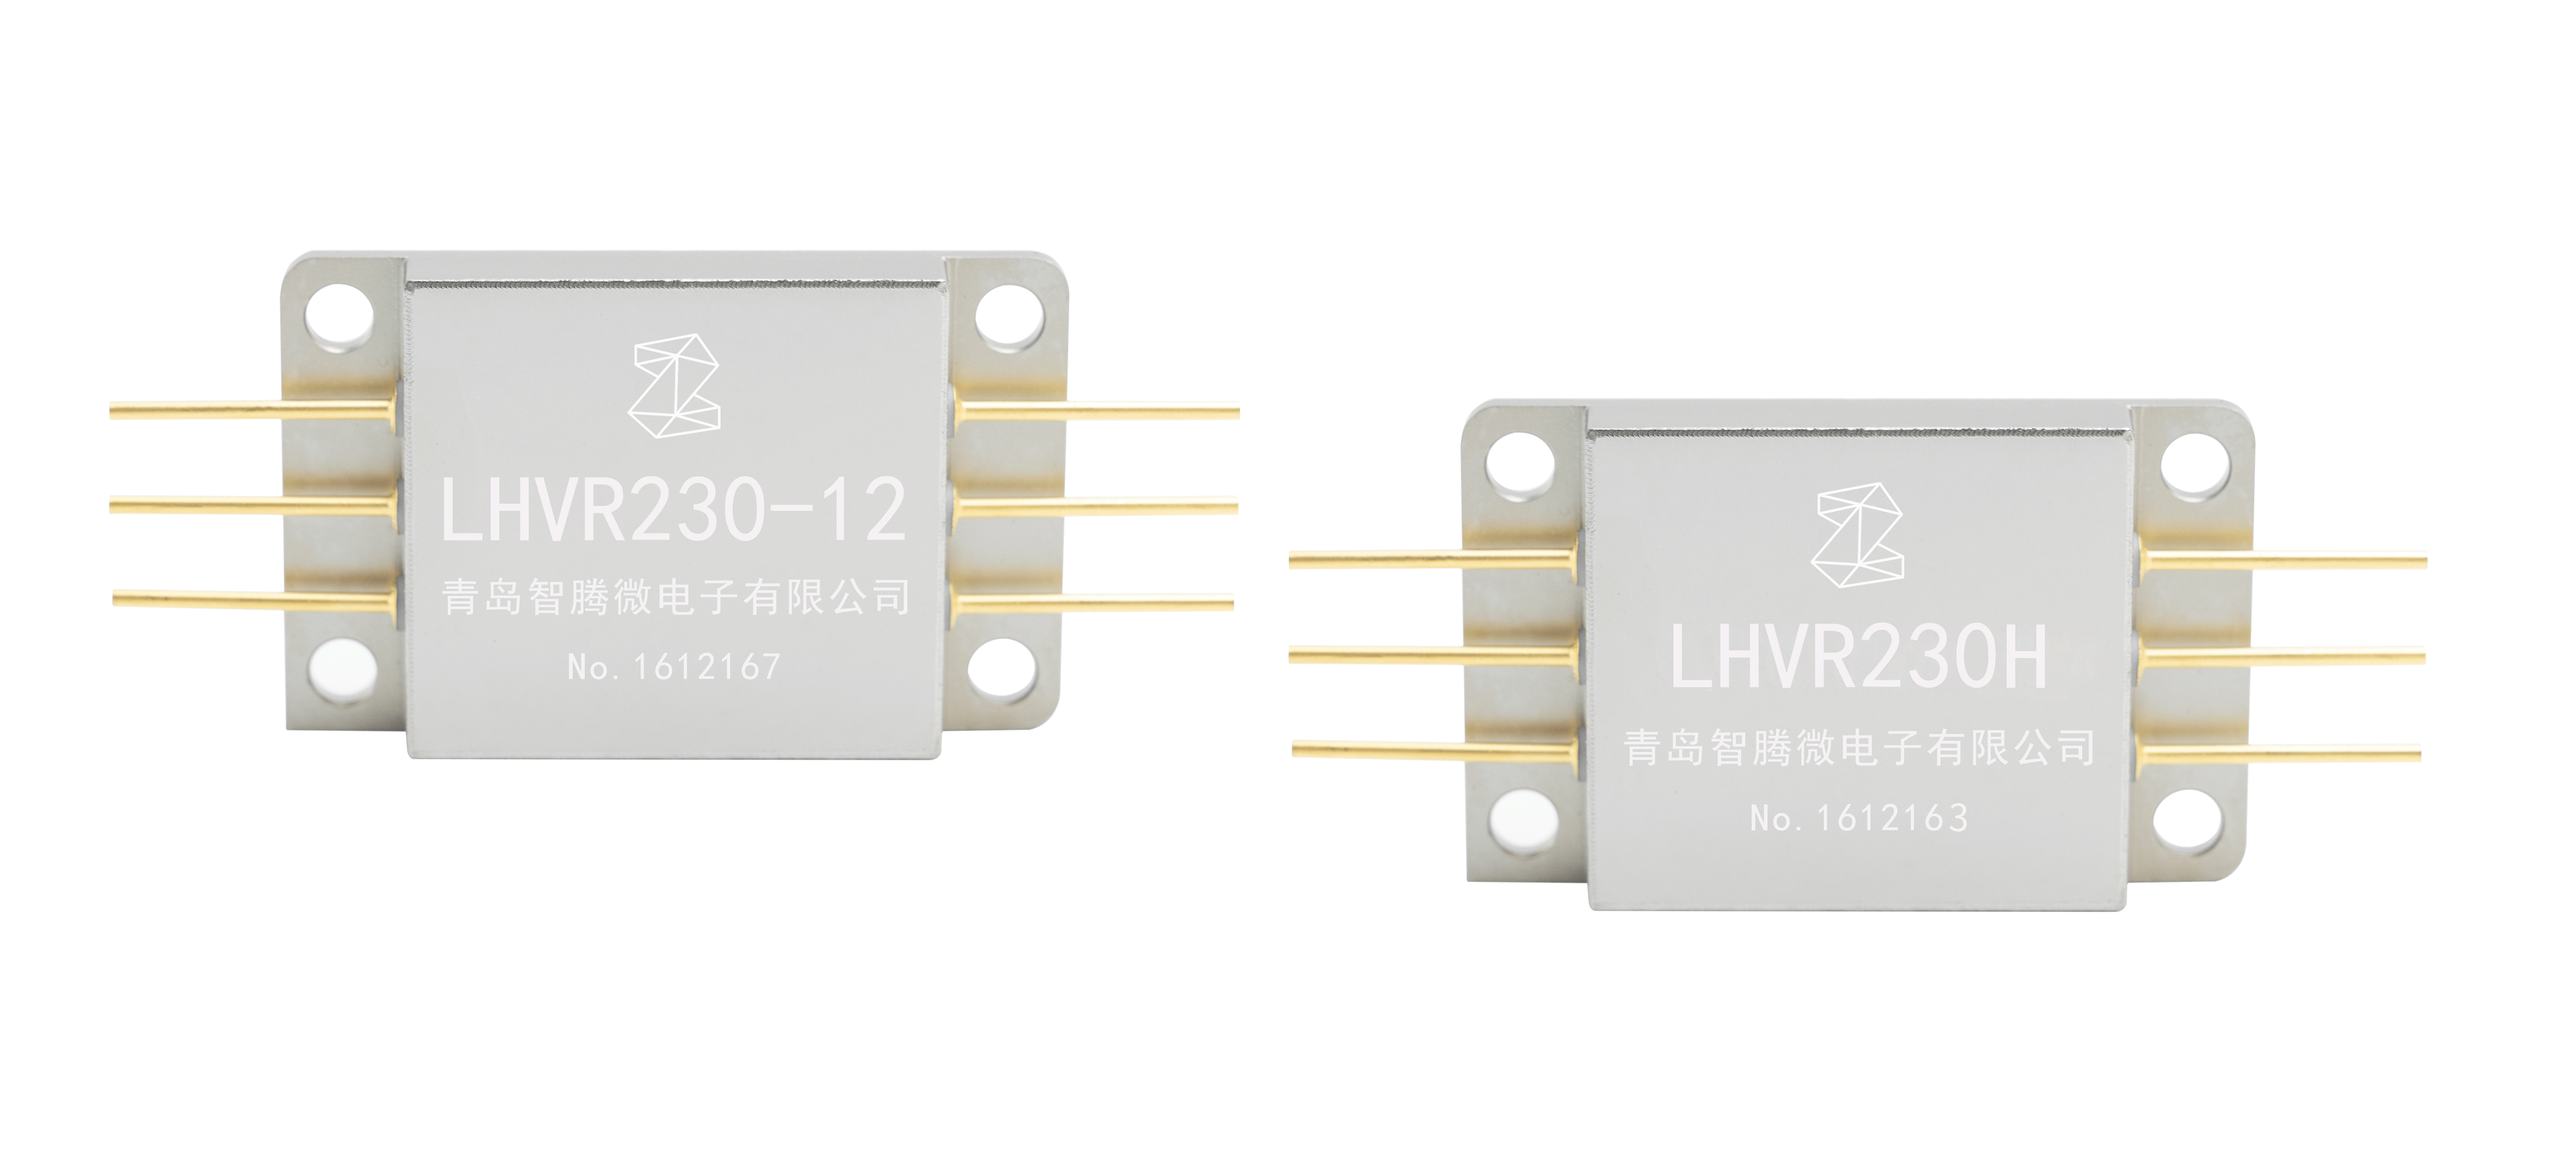 LHVR230/LHVR230H高温双路精密稳压器